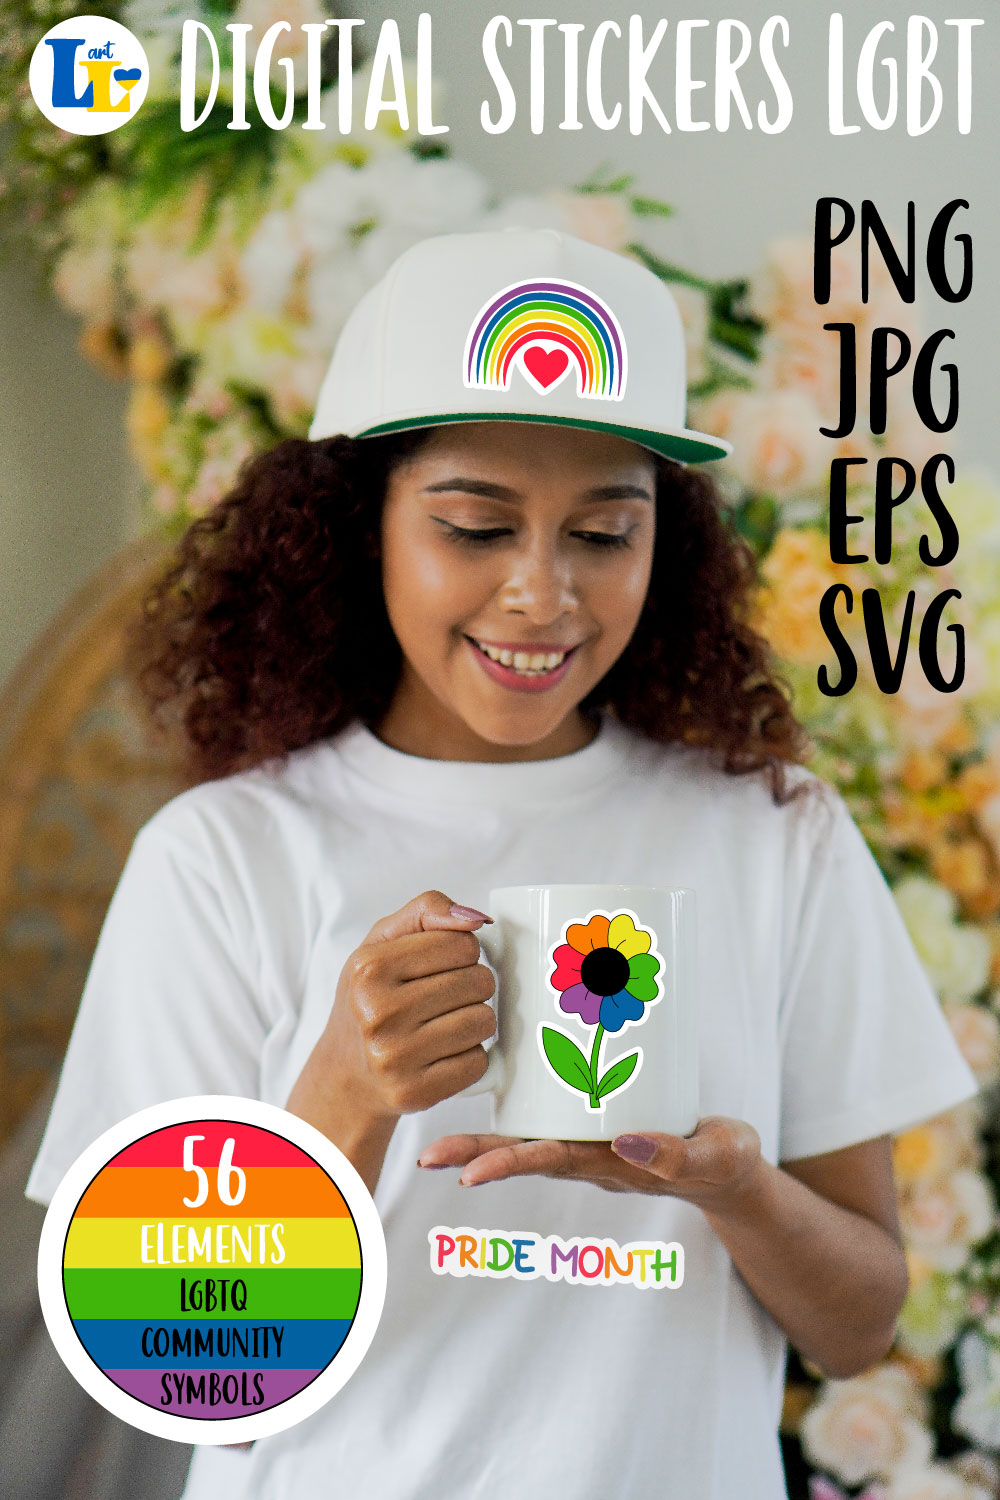 LGBTQ Community Symbols Daily Planner Digital Stickers Pinterest Image.